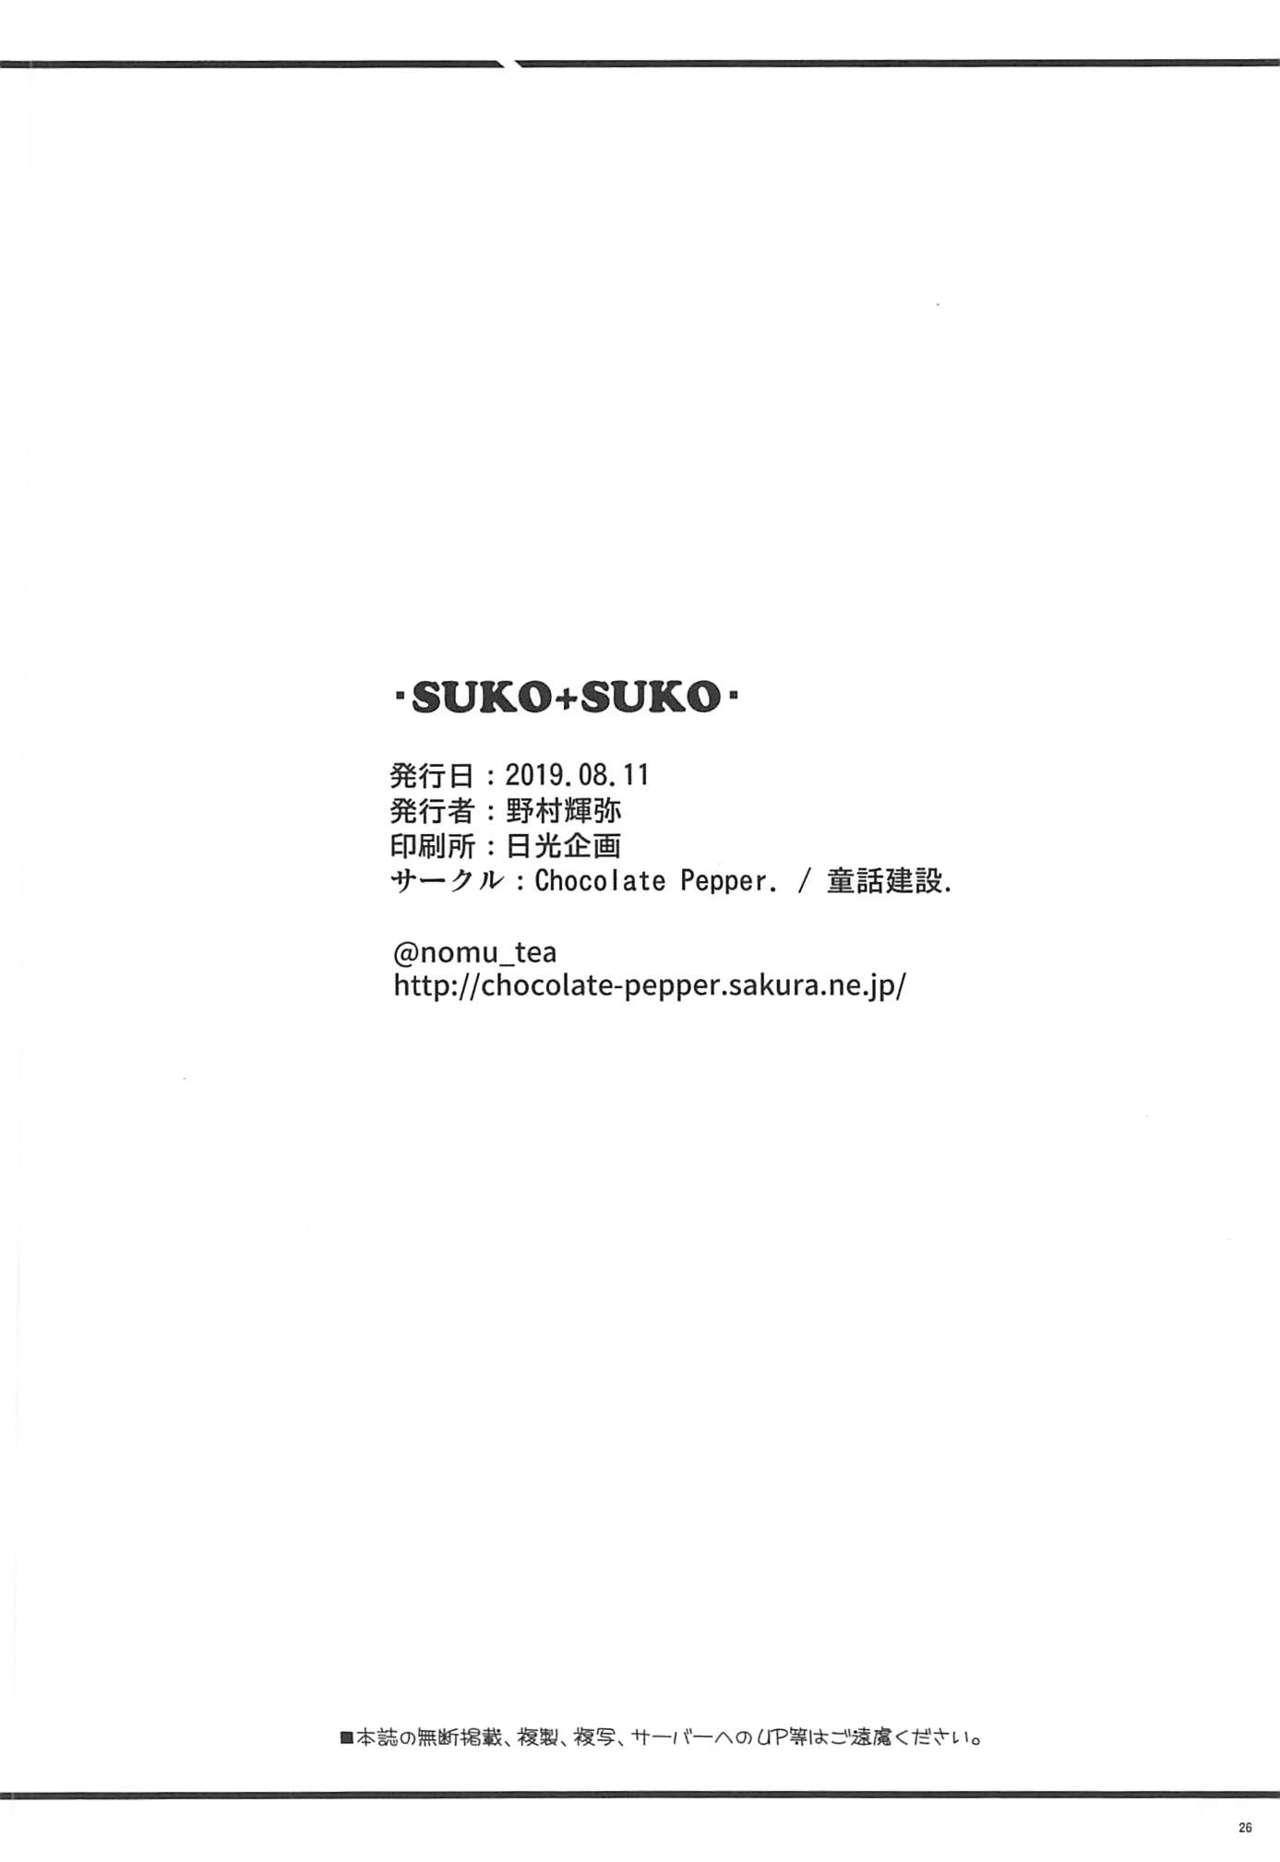 SUKO + SUKO 24